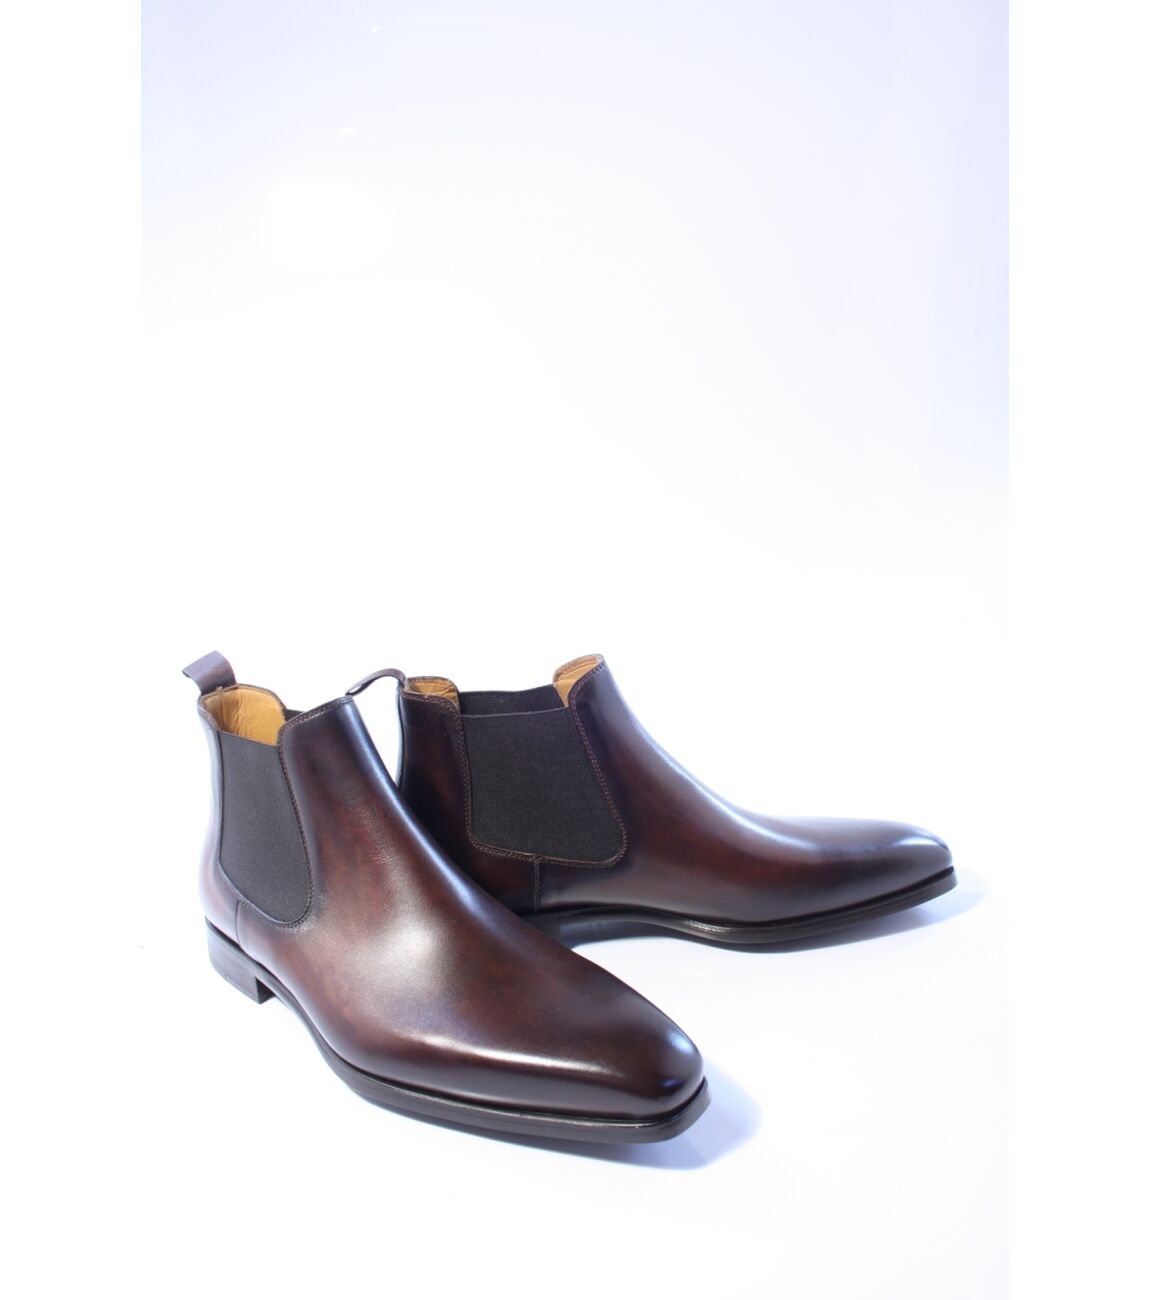 Magnanni Heren boots gekleed bruin 42.5